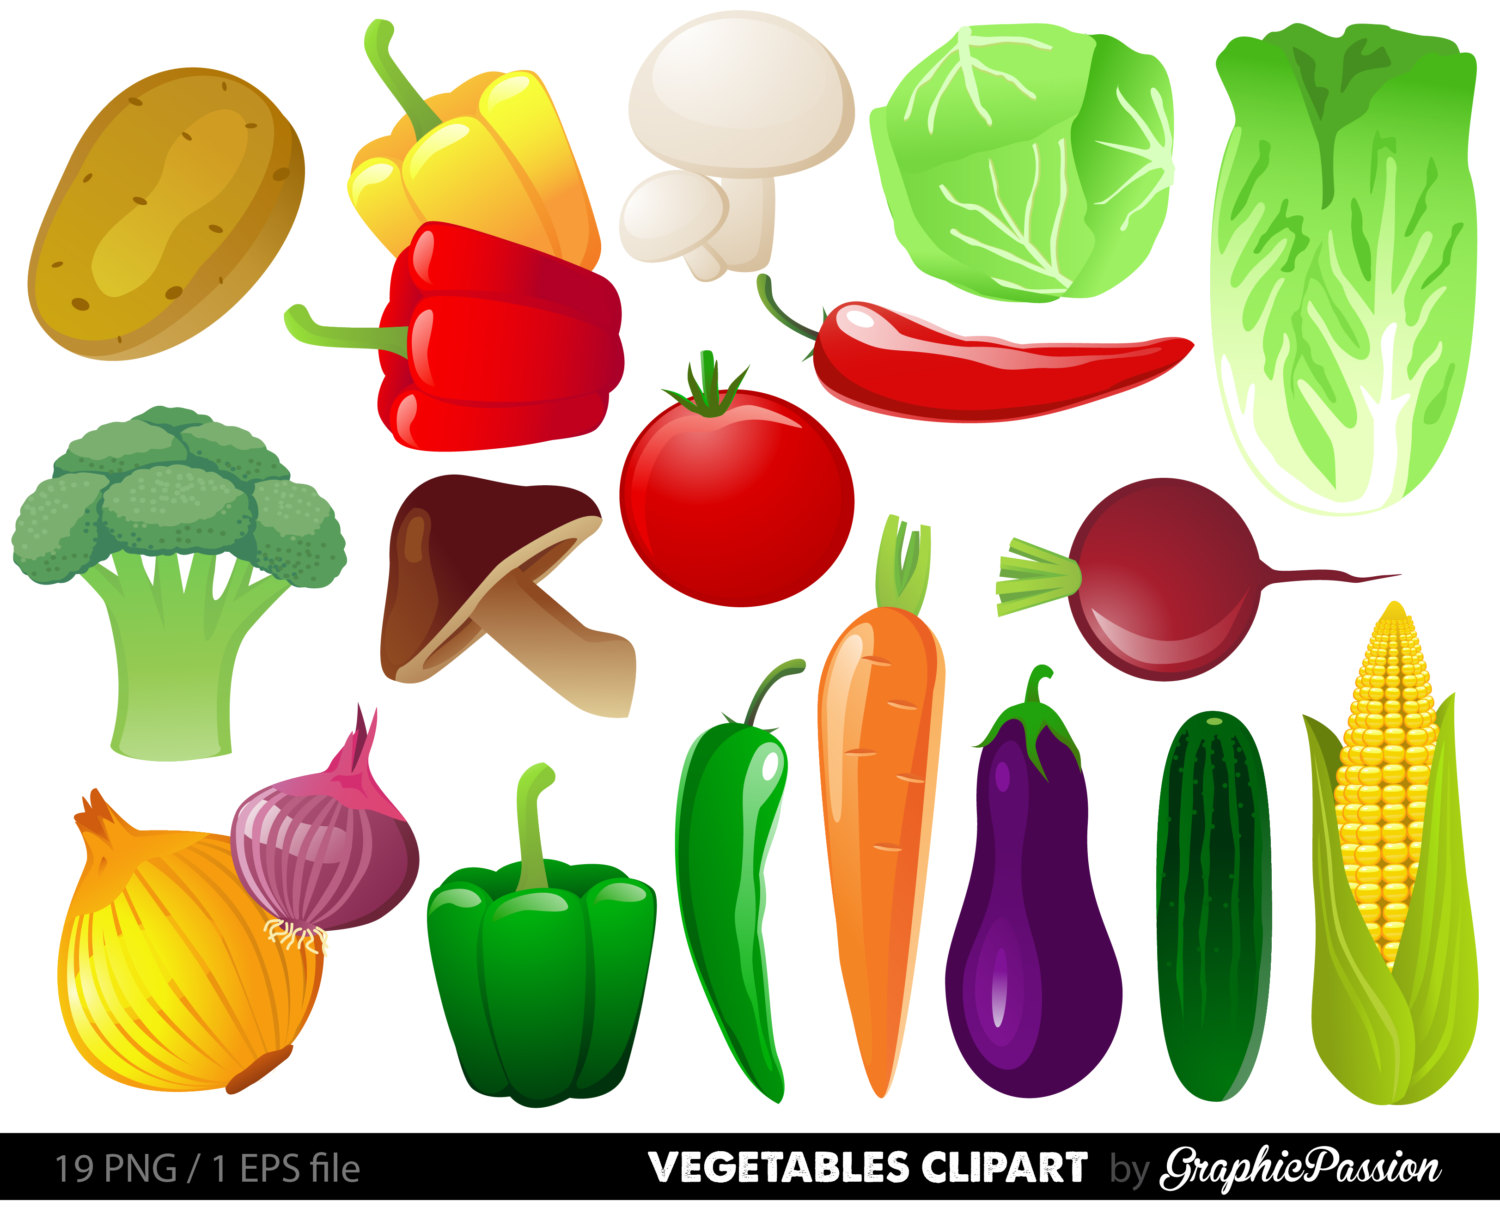 Vegetables clipart digital vegetables clip art vegetable digital illustration Food Clipart Food digital images Vegetables Digital Images